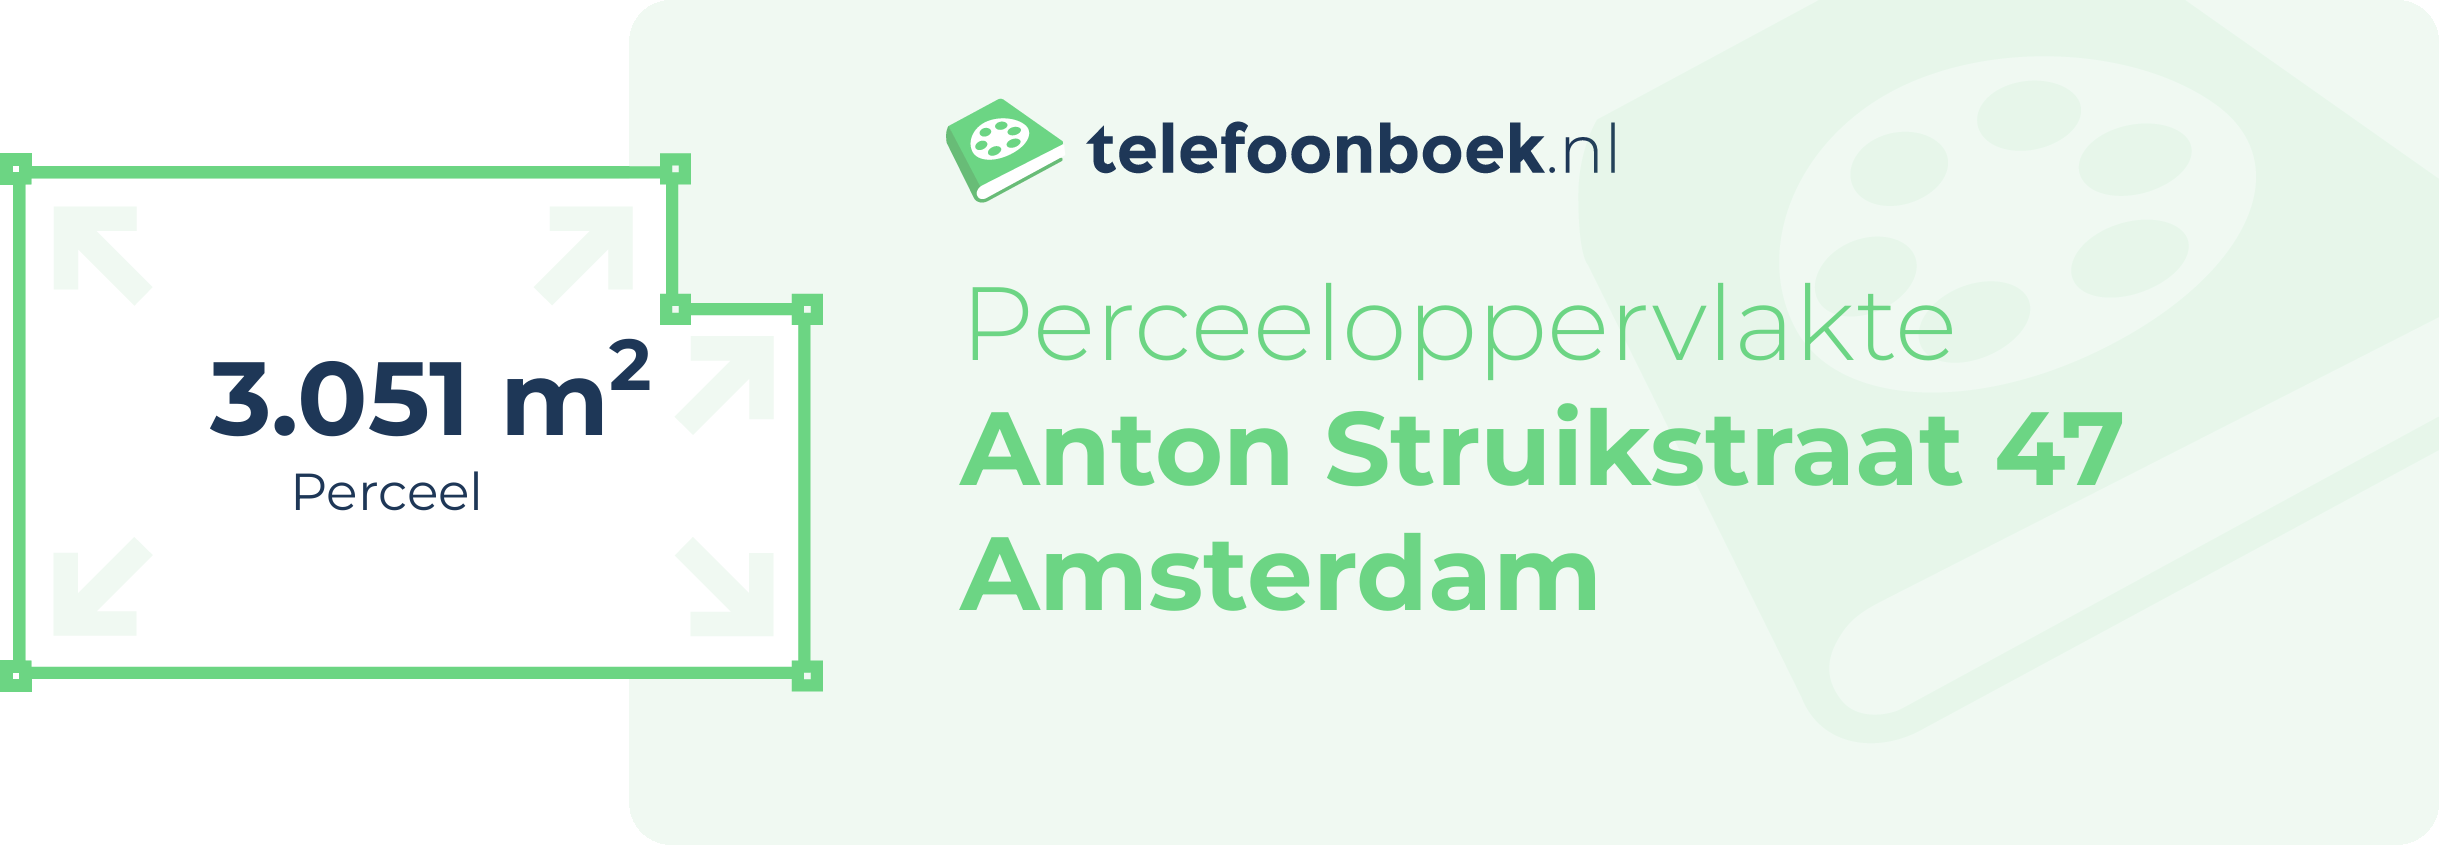 Perceeloppervlakte Anton Struikstraat 47 Amsterdam